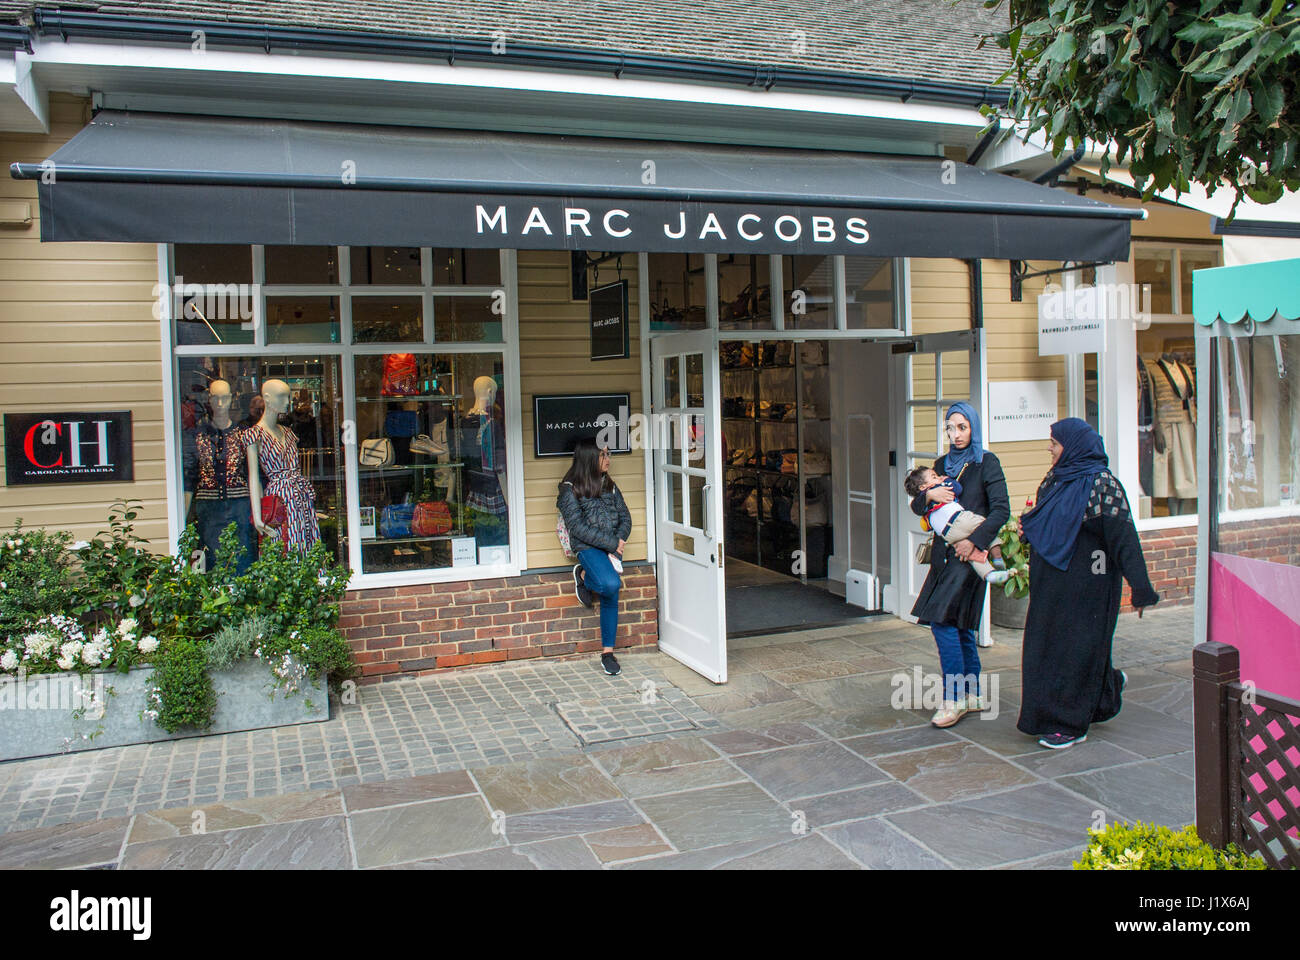 Marc jacobs shop fotografías e imágenes de alta resolución - Alamy